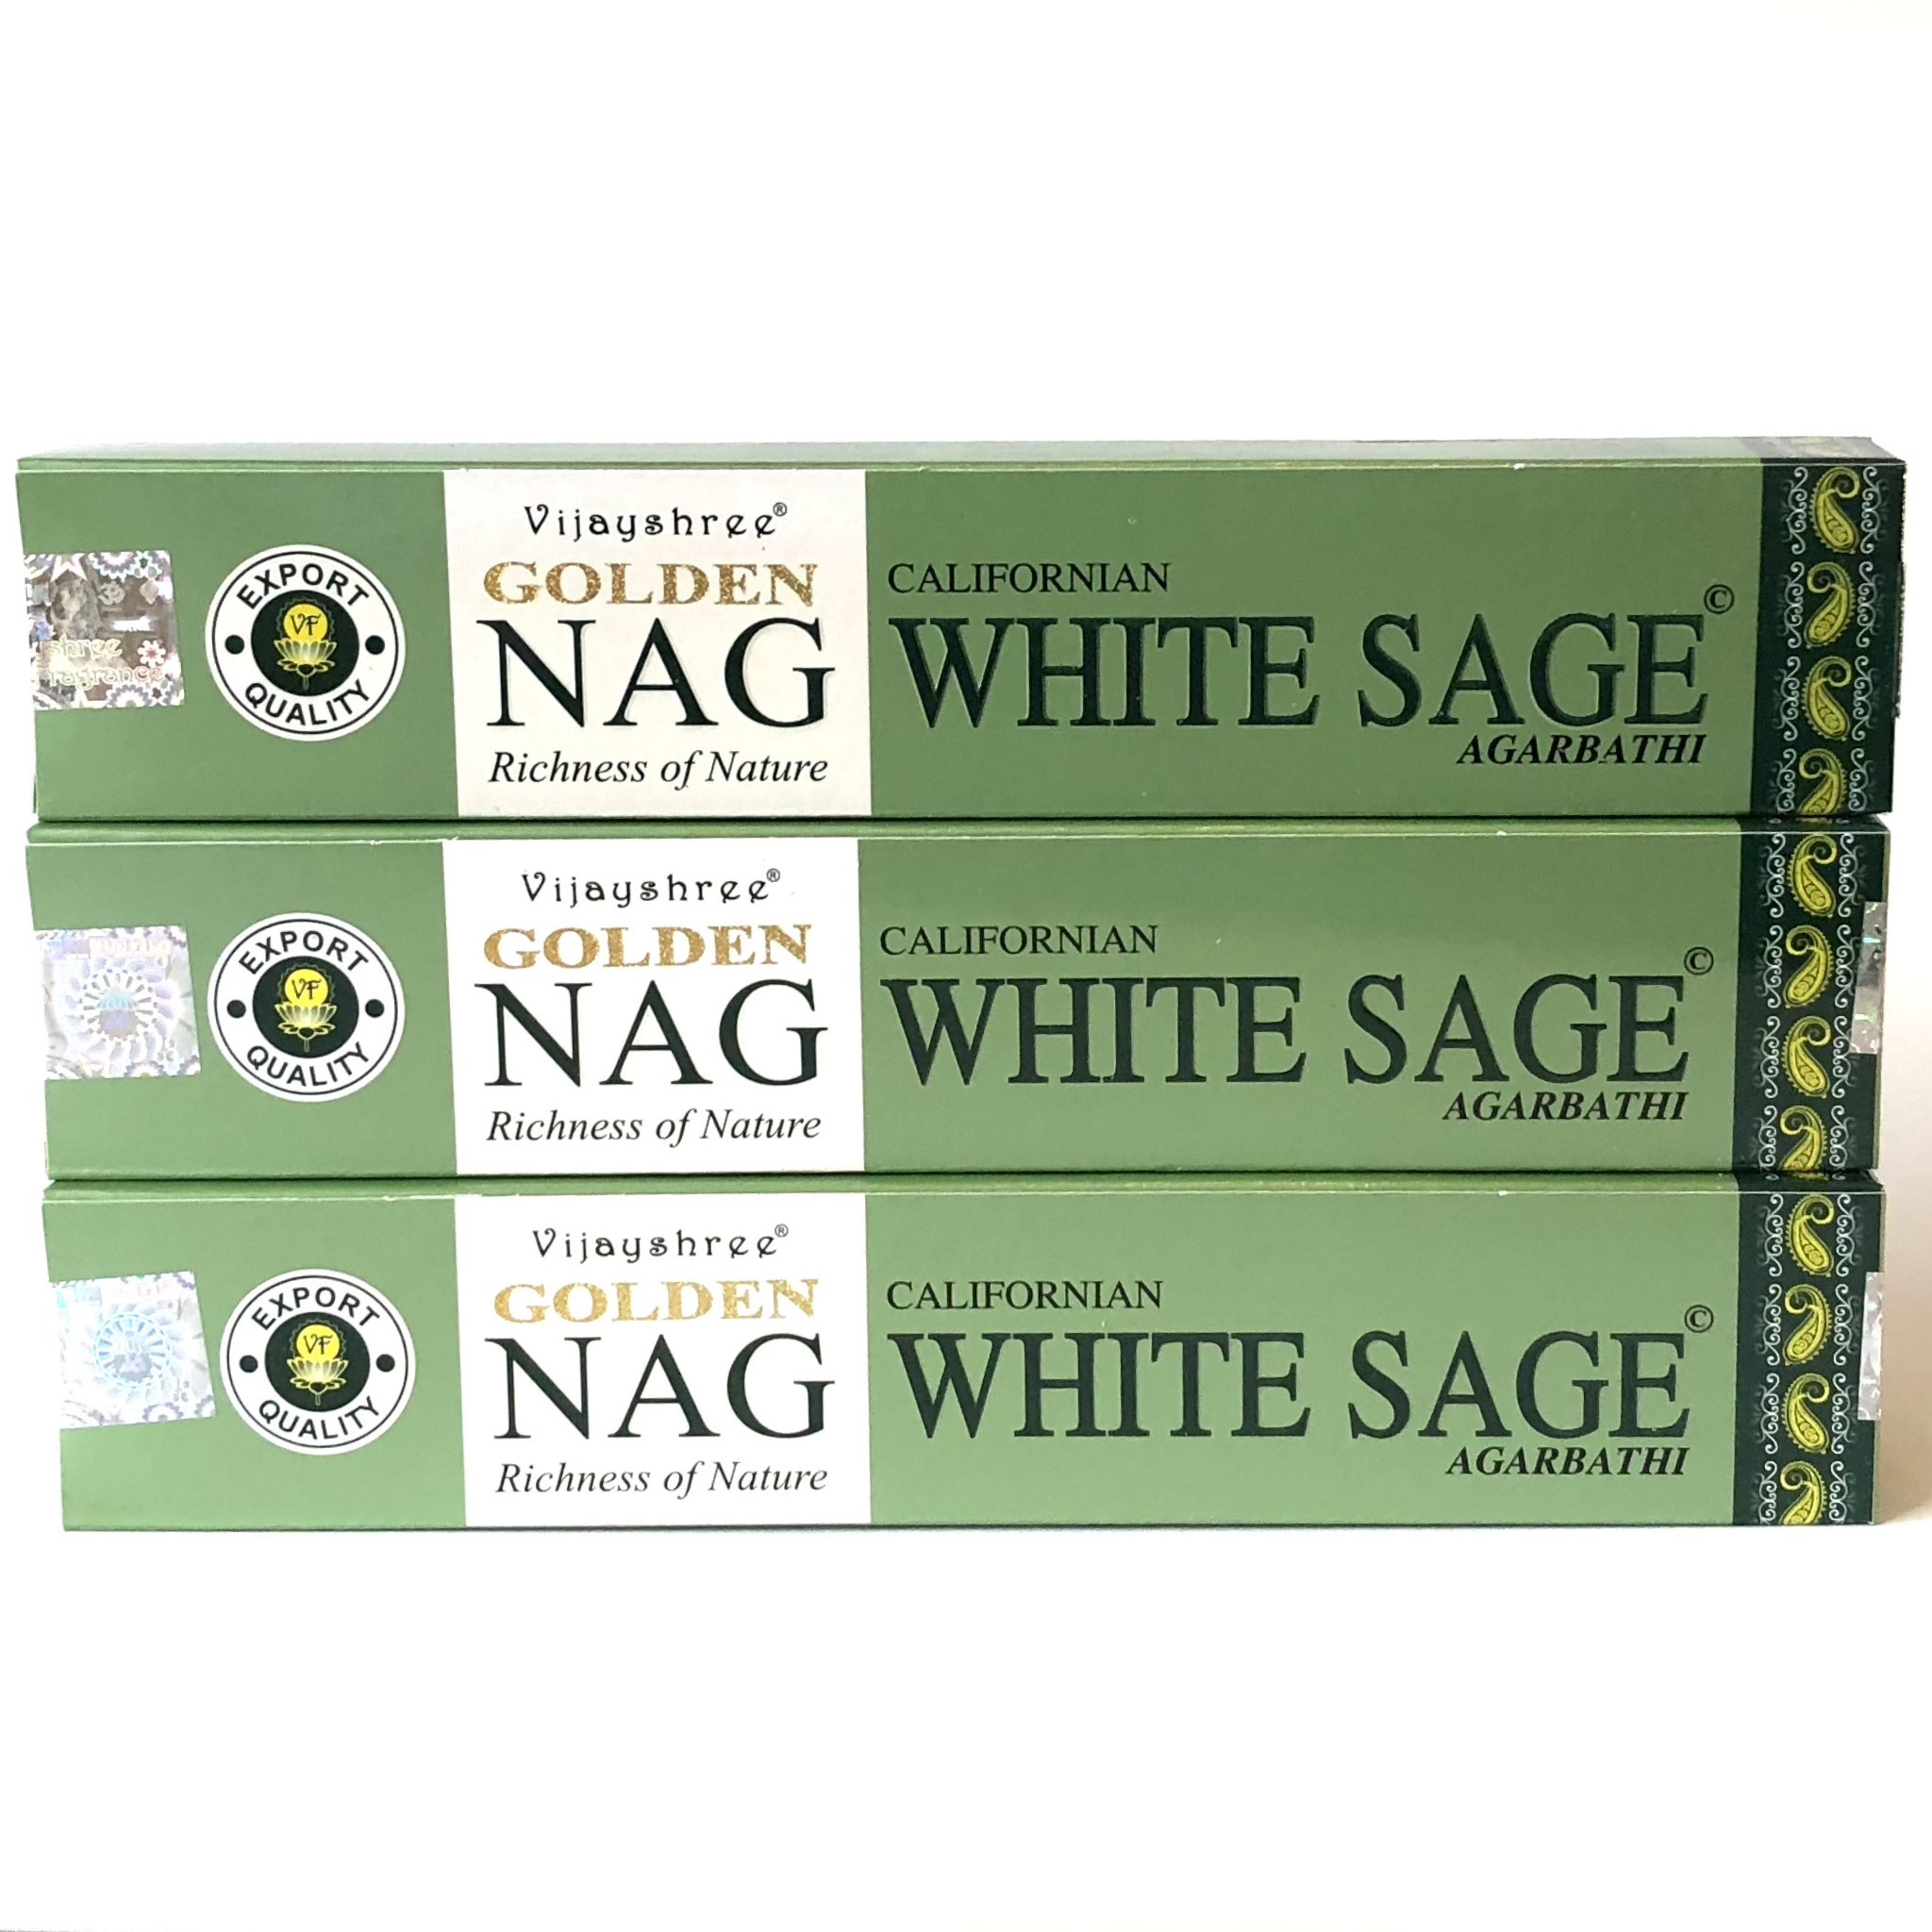 Golden Nag White Sage Incense Sticks